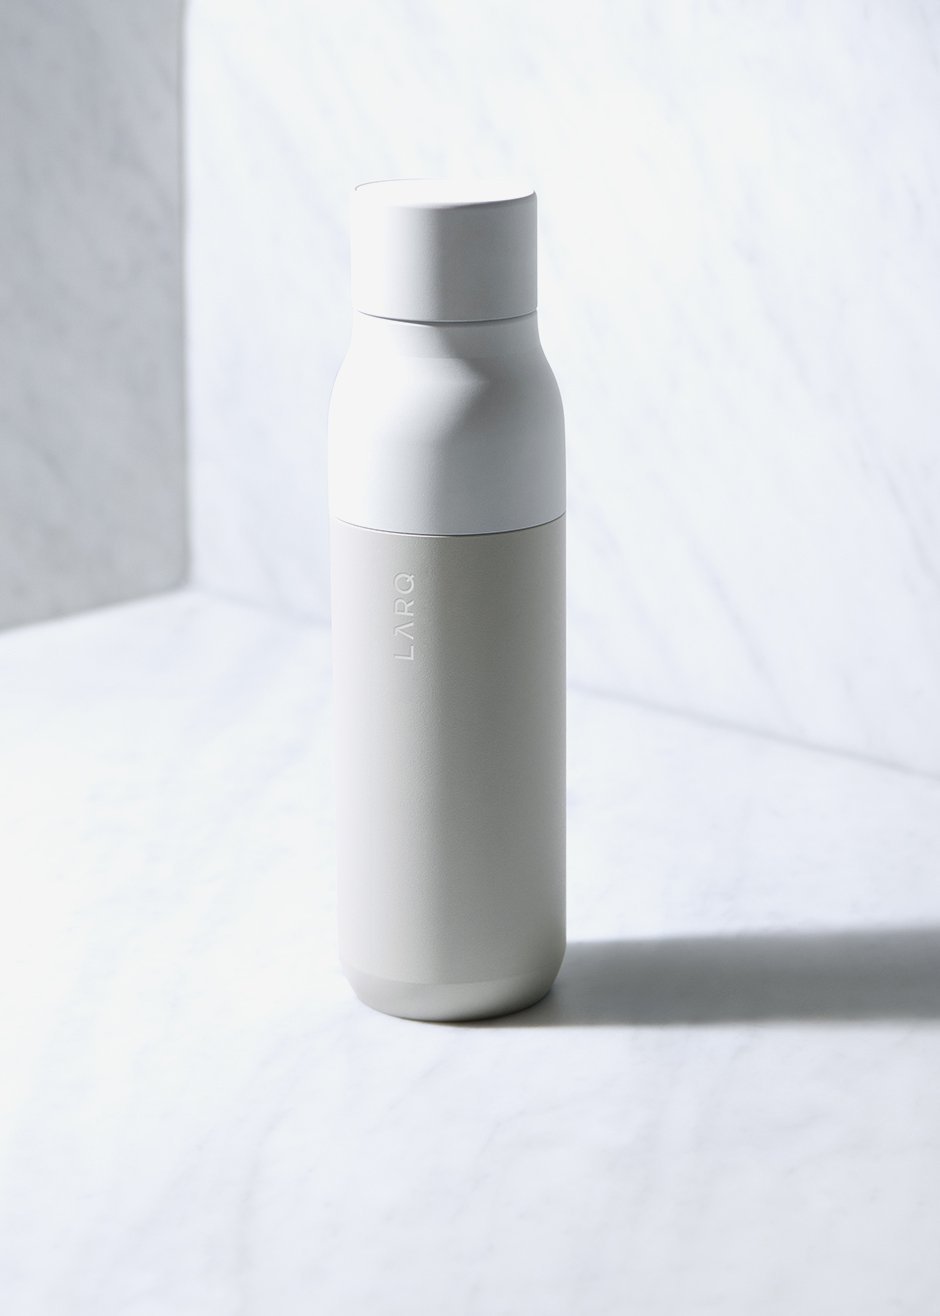 LARQ x TFS Self-Cleaning Water Bottle - Granite White - 8